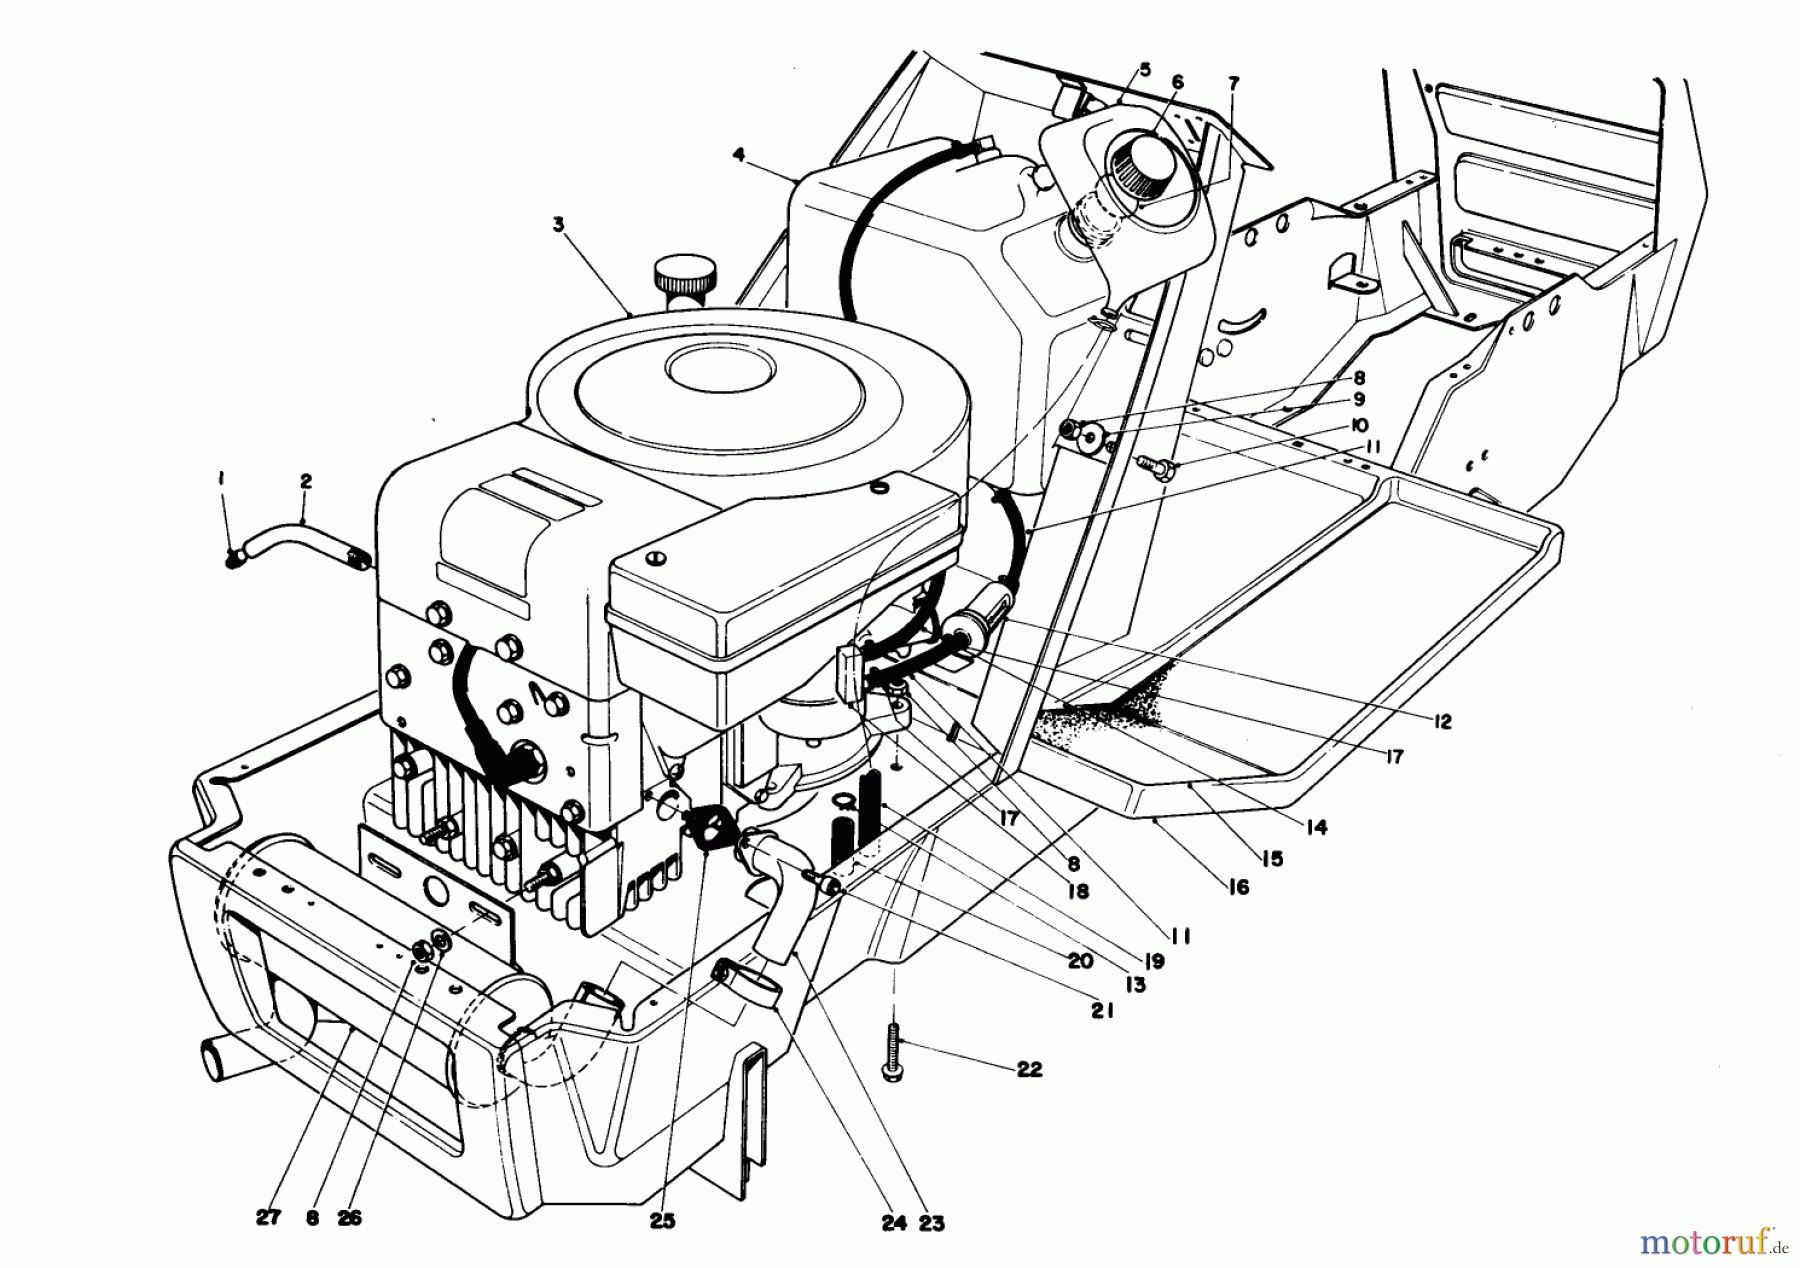  Toro Neu Mowers, Lawn & Garden Tractor Seite 1 57360 (11-32) - Toro 11-32 Lawn Tractor, 1980 (0000001-0999999) ENGINE ASSEMBLY MODEL 57360